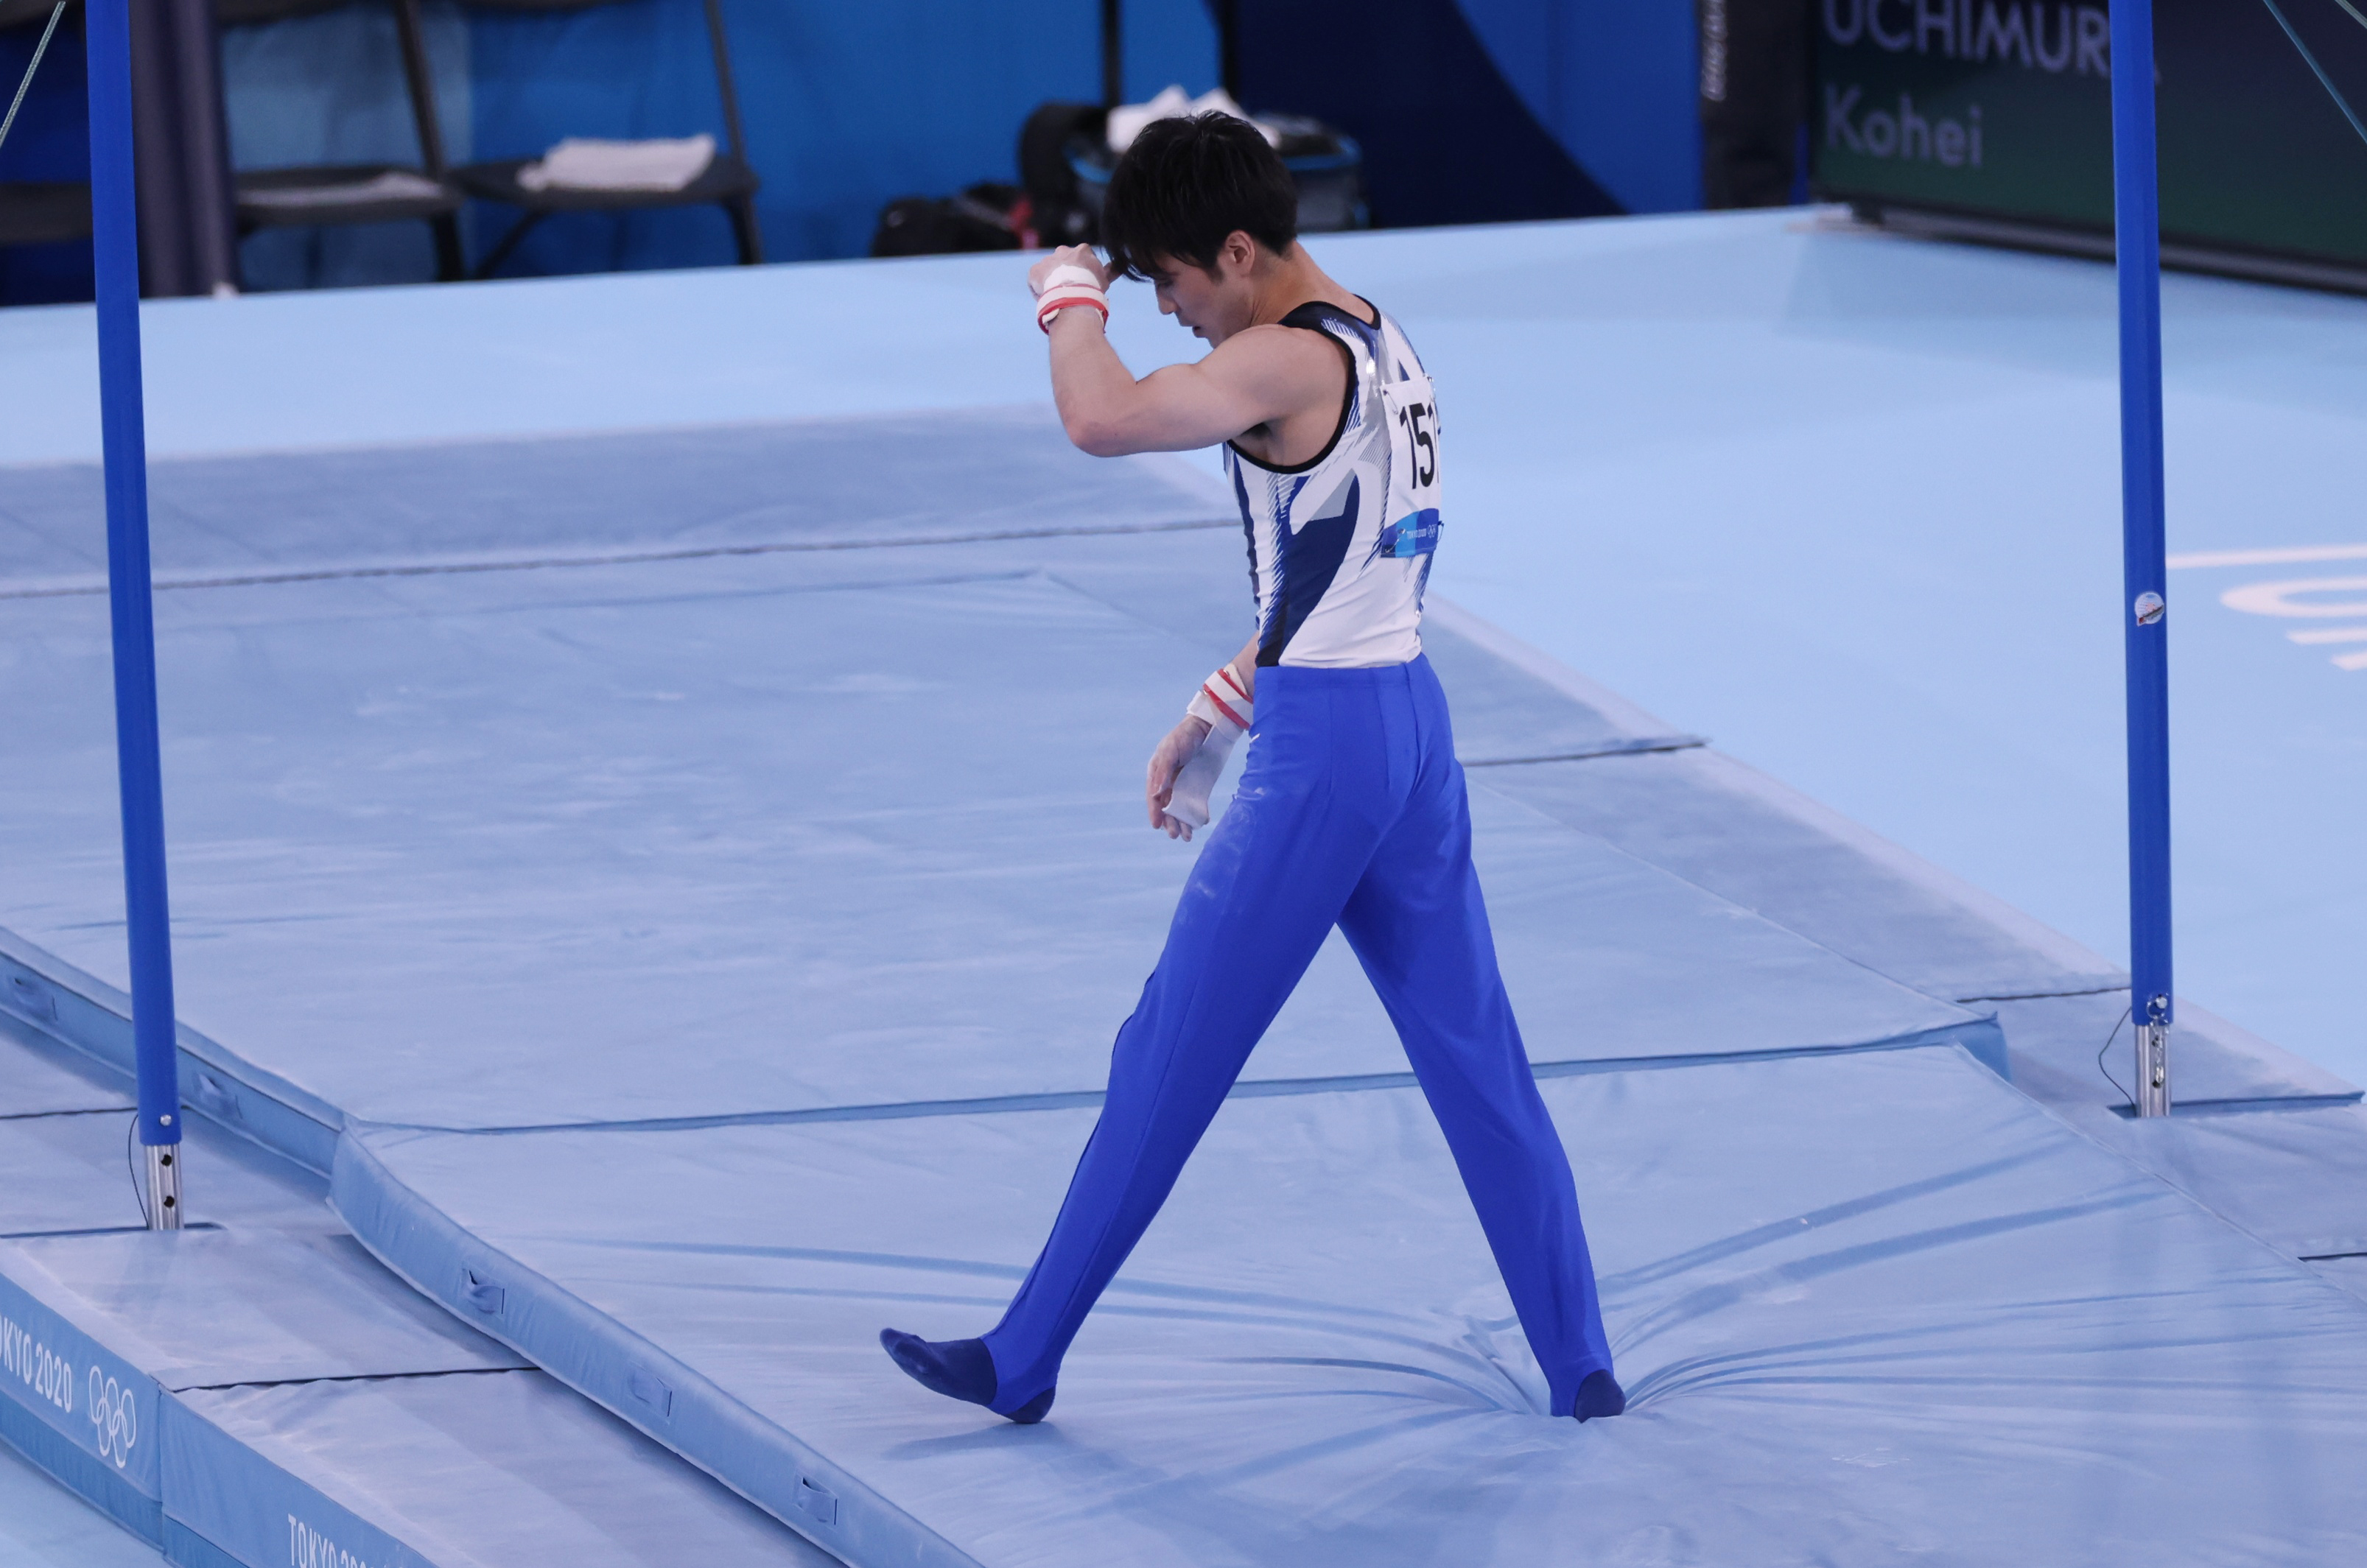 Japan's Kohei Uchimura competes during the Artistic Gymnastics